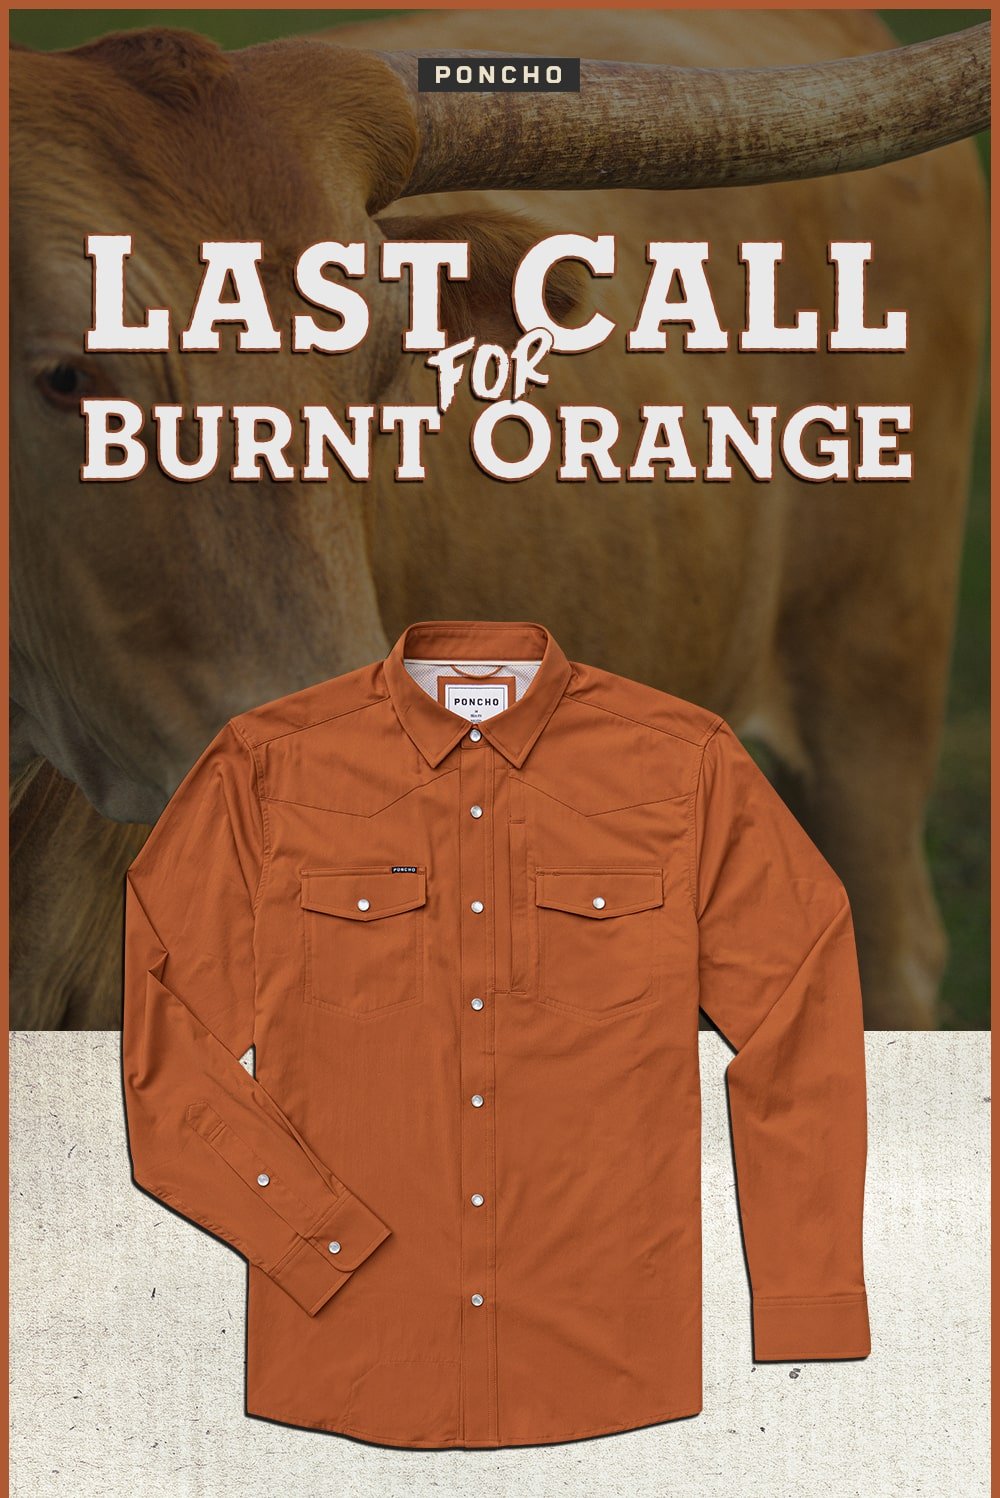 Poncho: Last call for burnt orange shirts